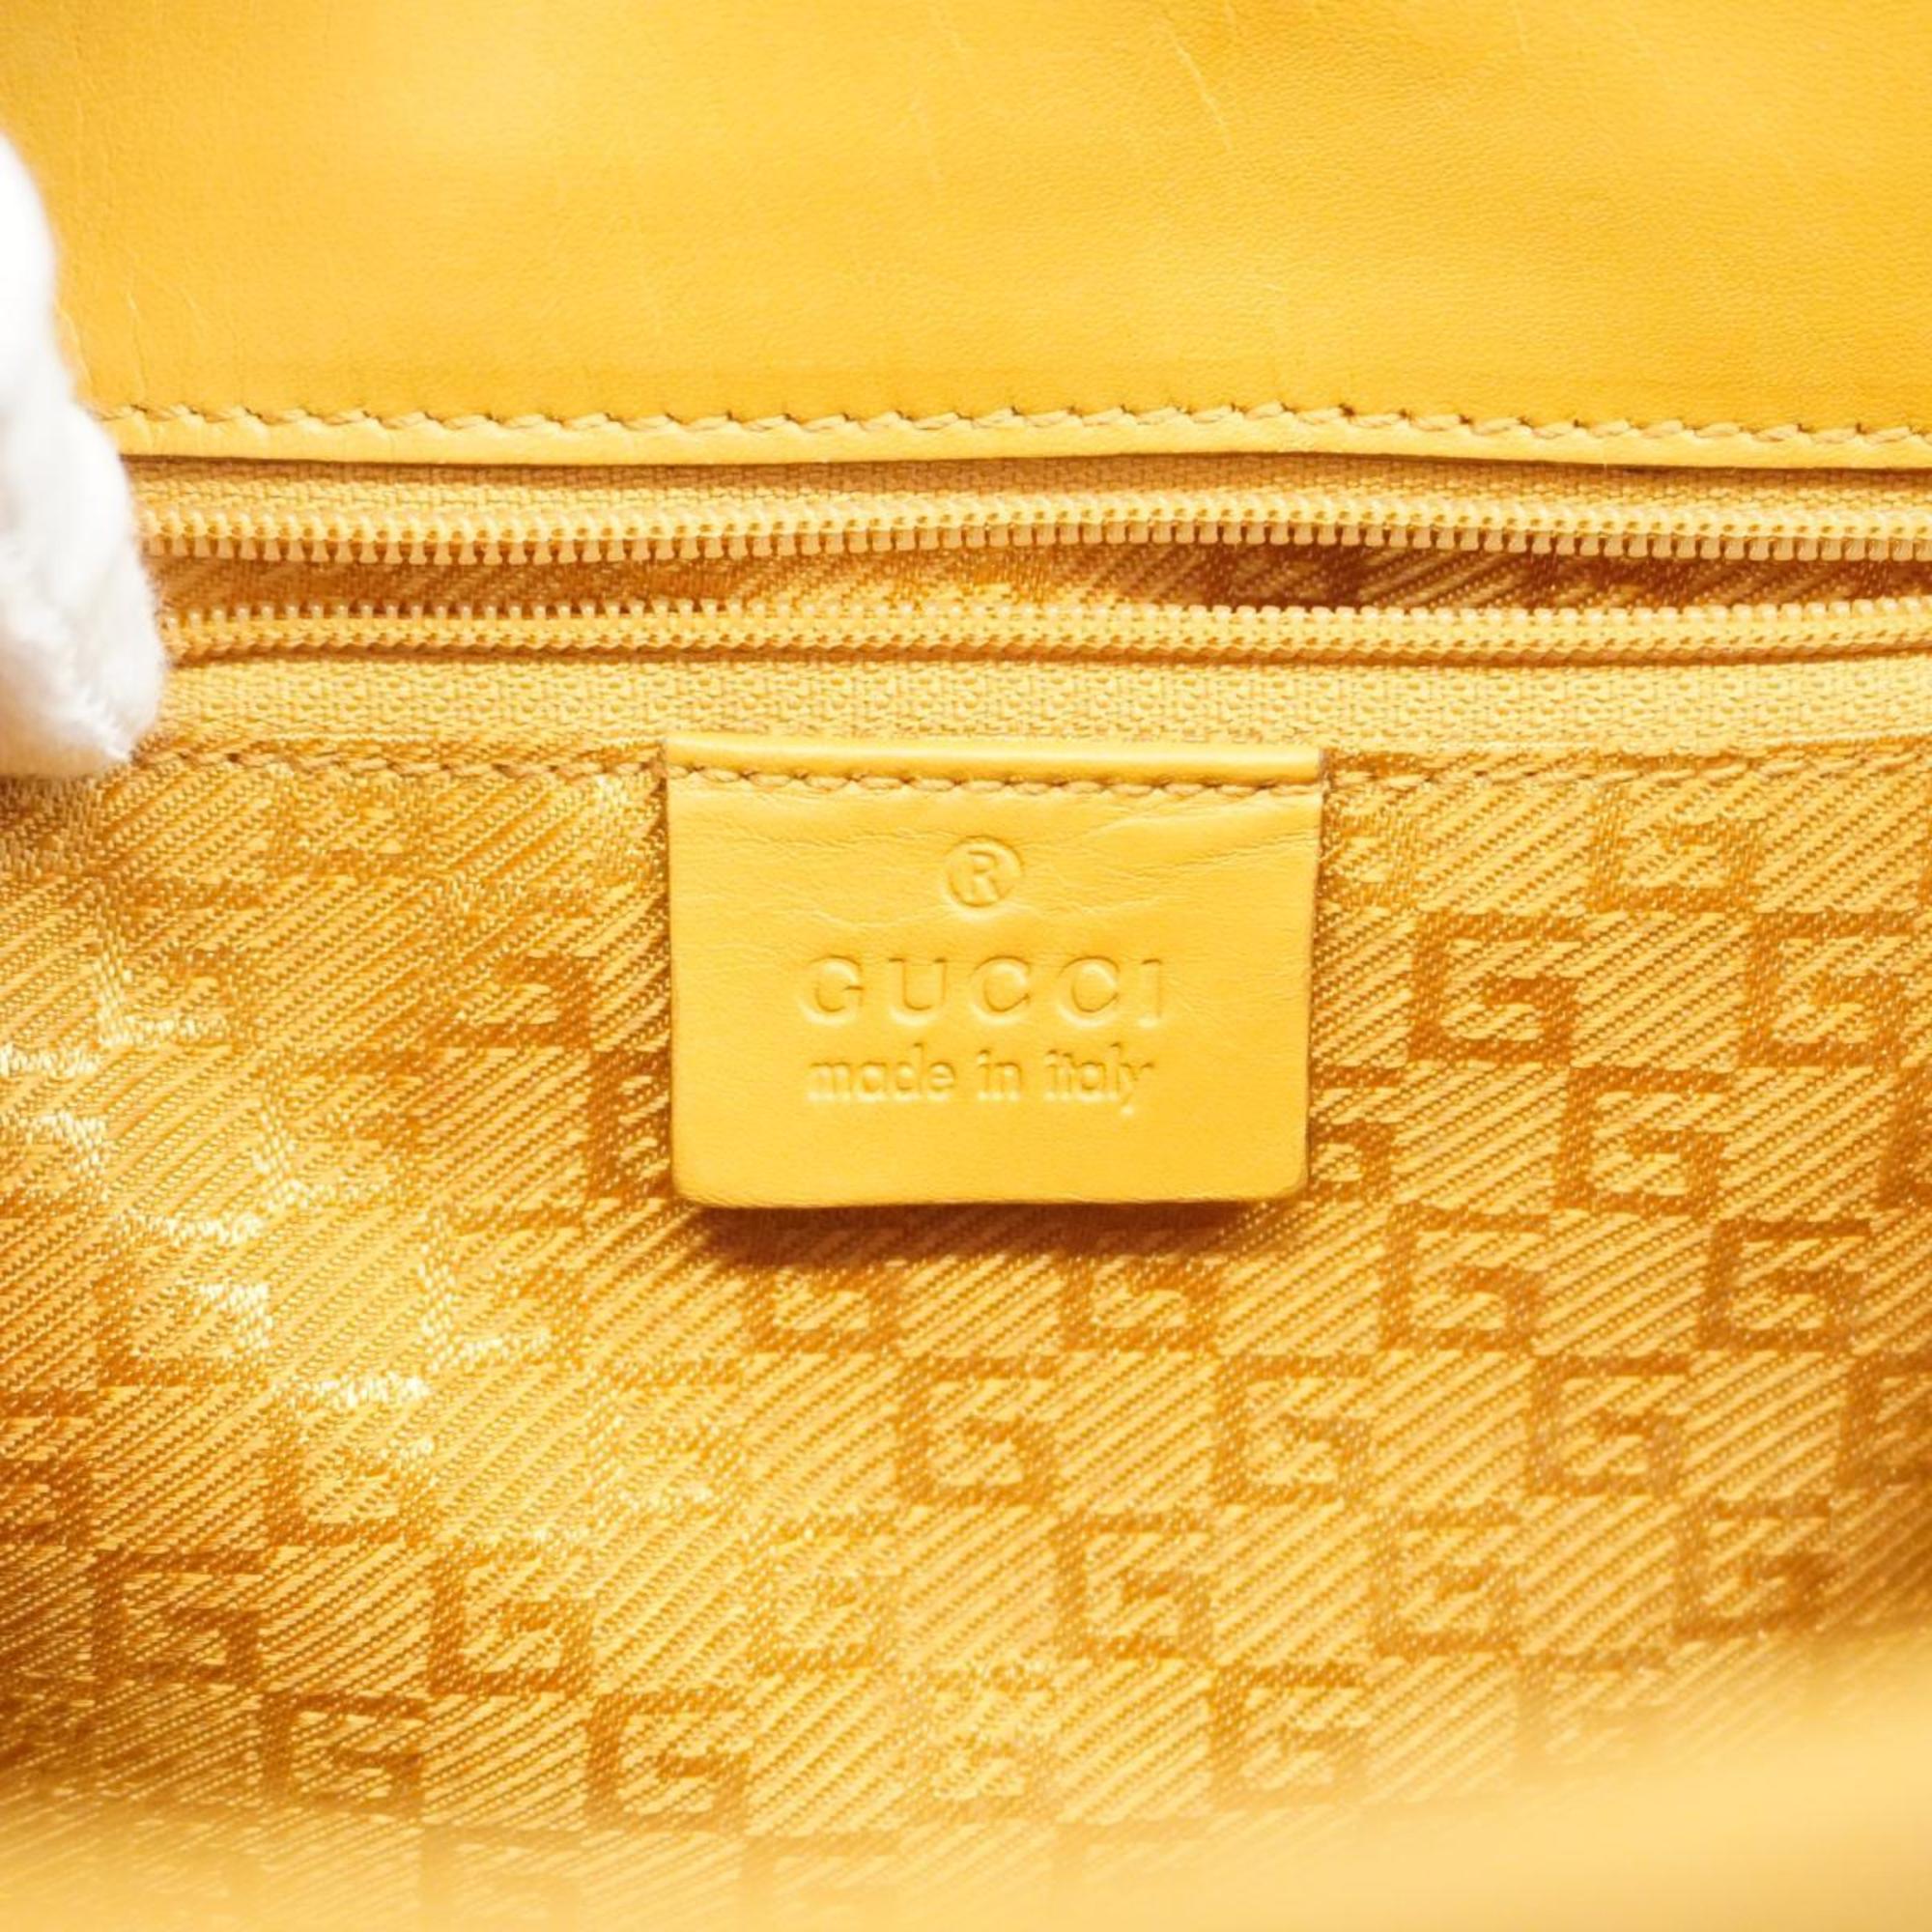 Gucci Handbag Jackie 002 1068 Suede Leather Pink Brown Women's